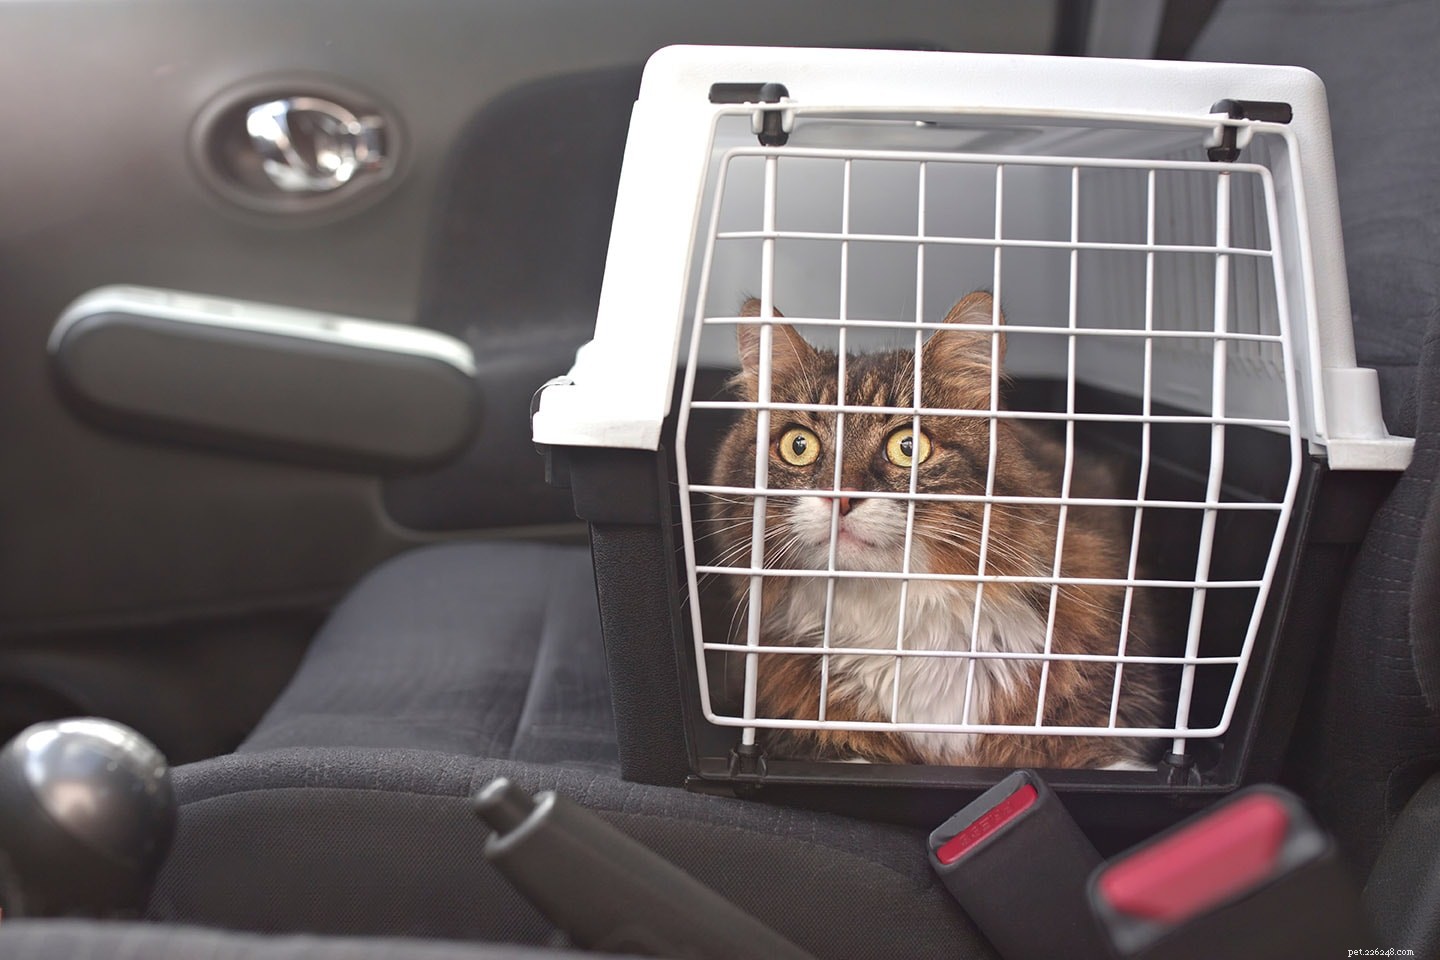 Como acalmar um gato no carro (8 métodos comprovados)